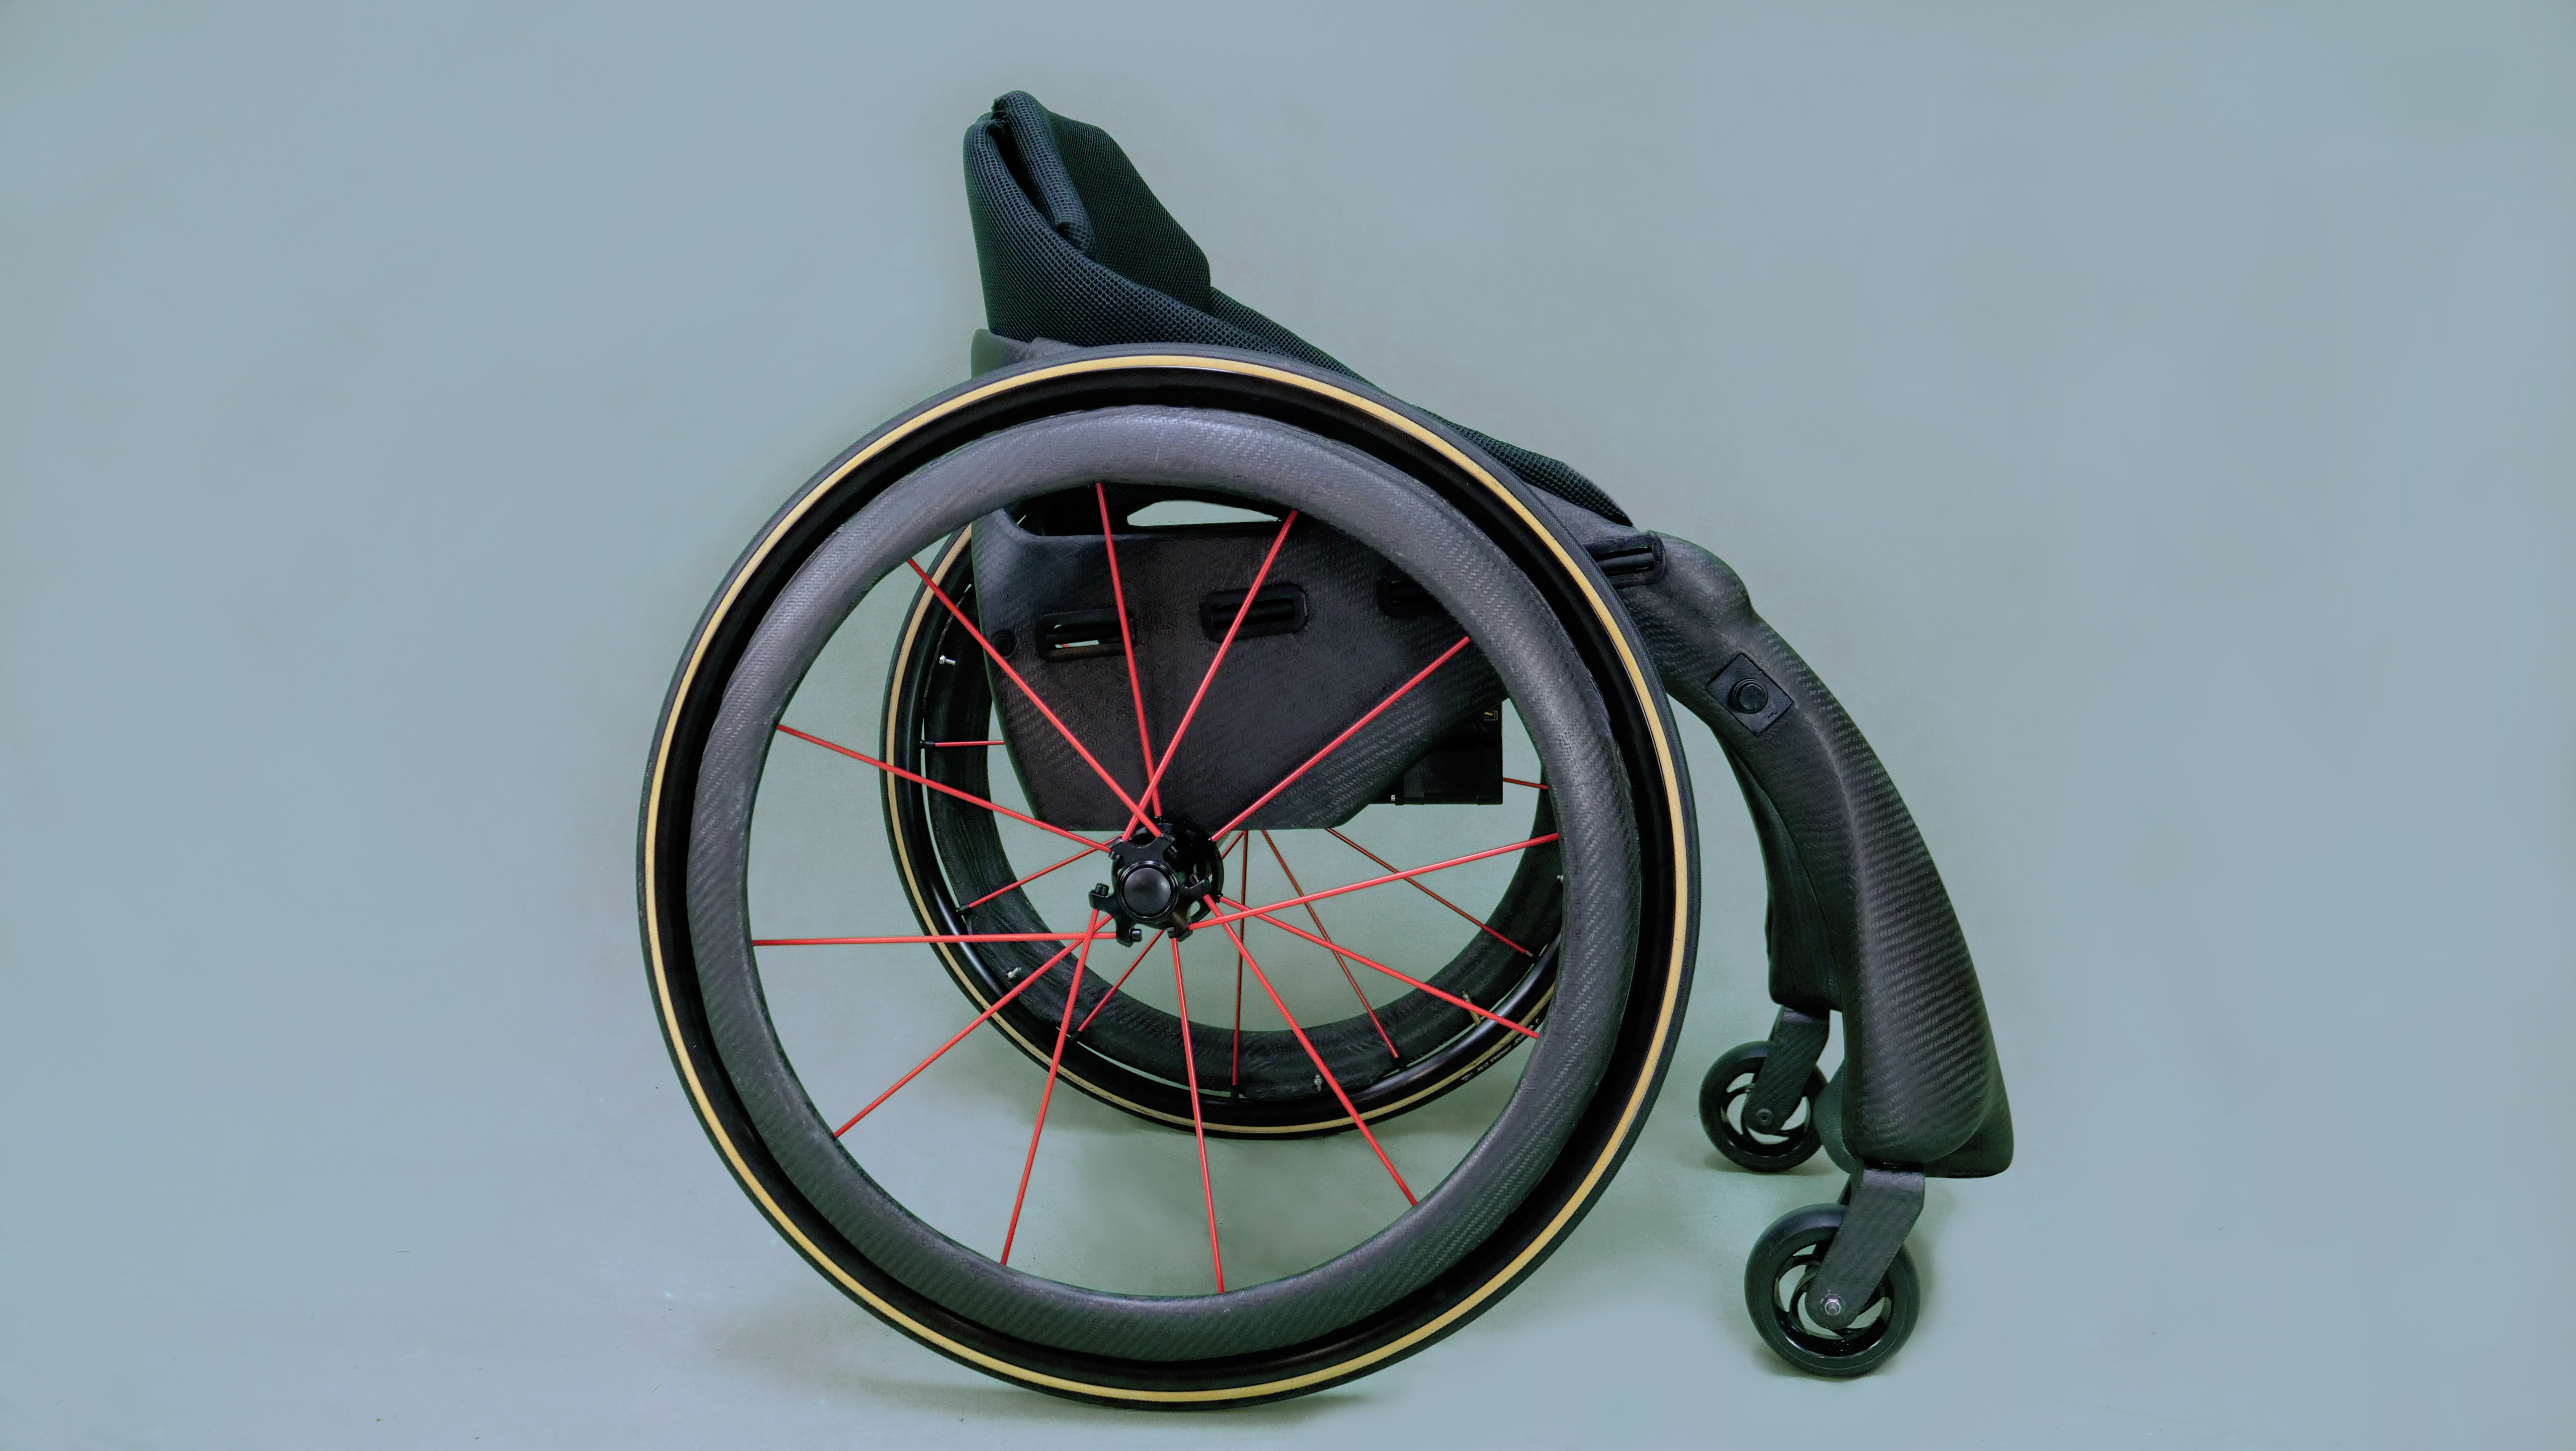 Phoenix Instinct's Phoenix i wheelchair